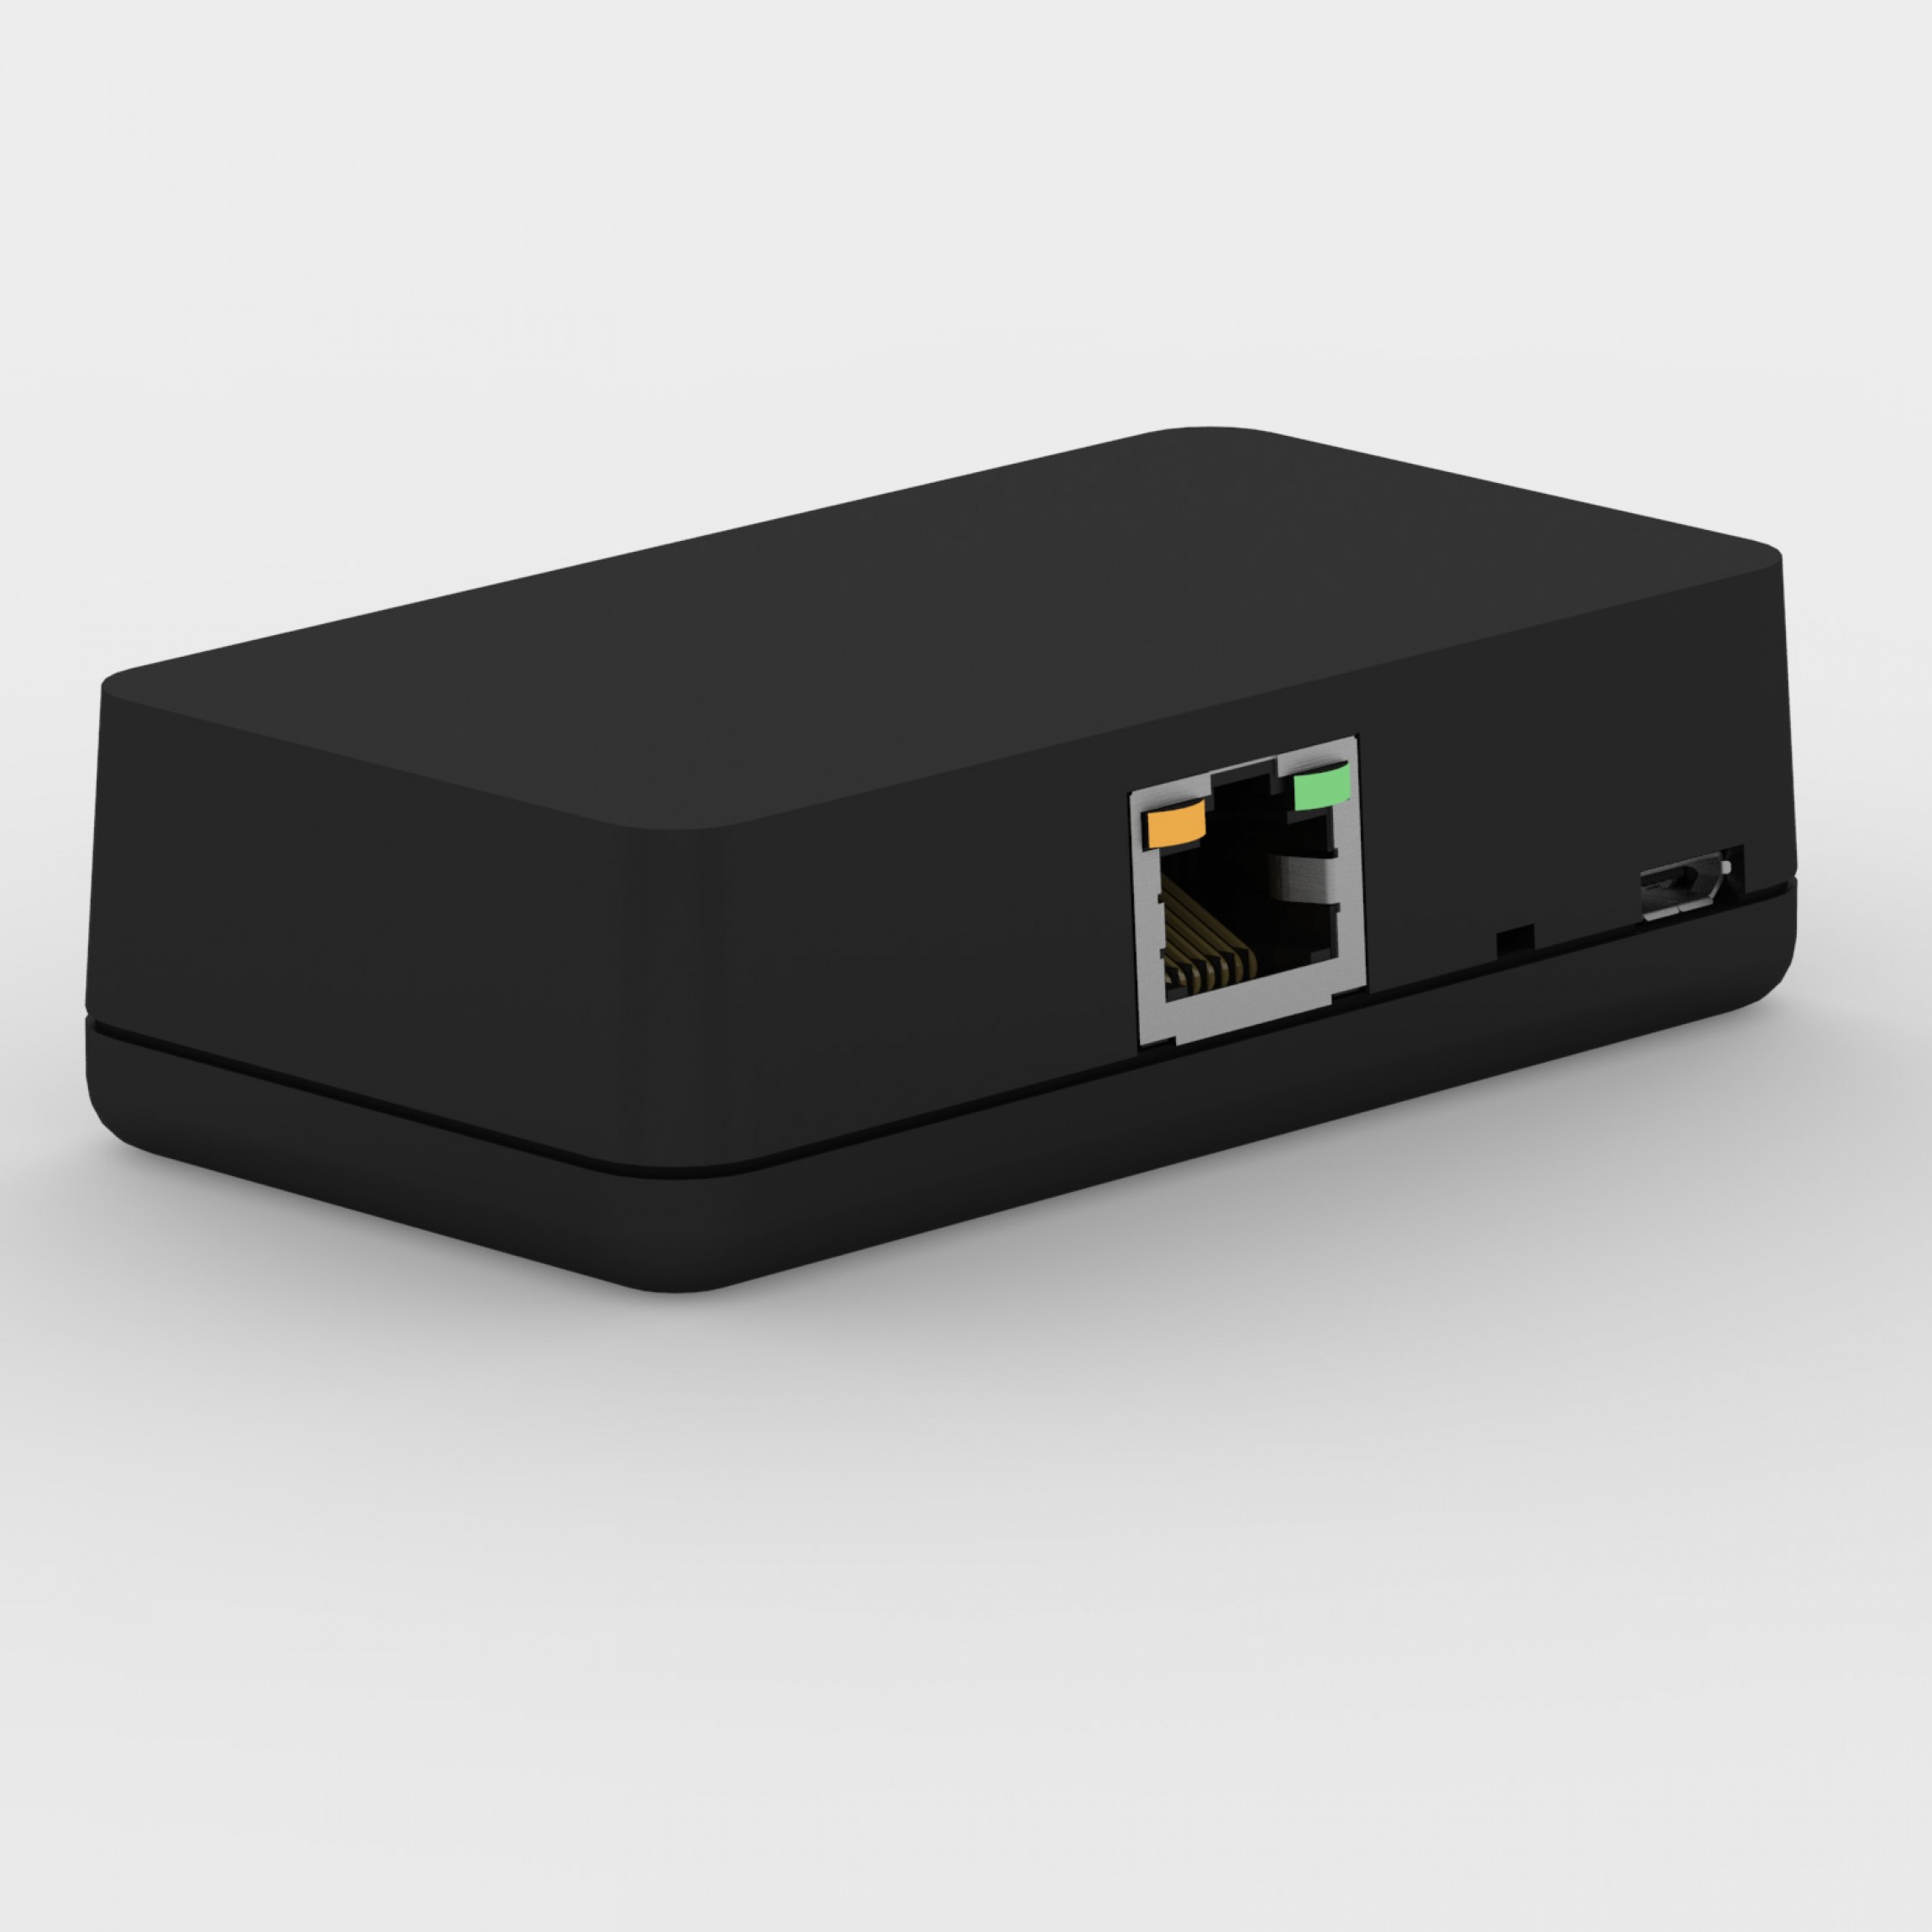 Redpark Gigabit + PoE Adapter for iPad (Data and Power)